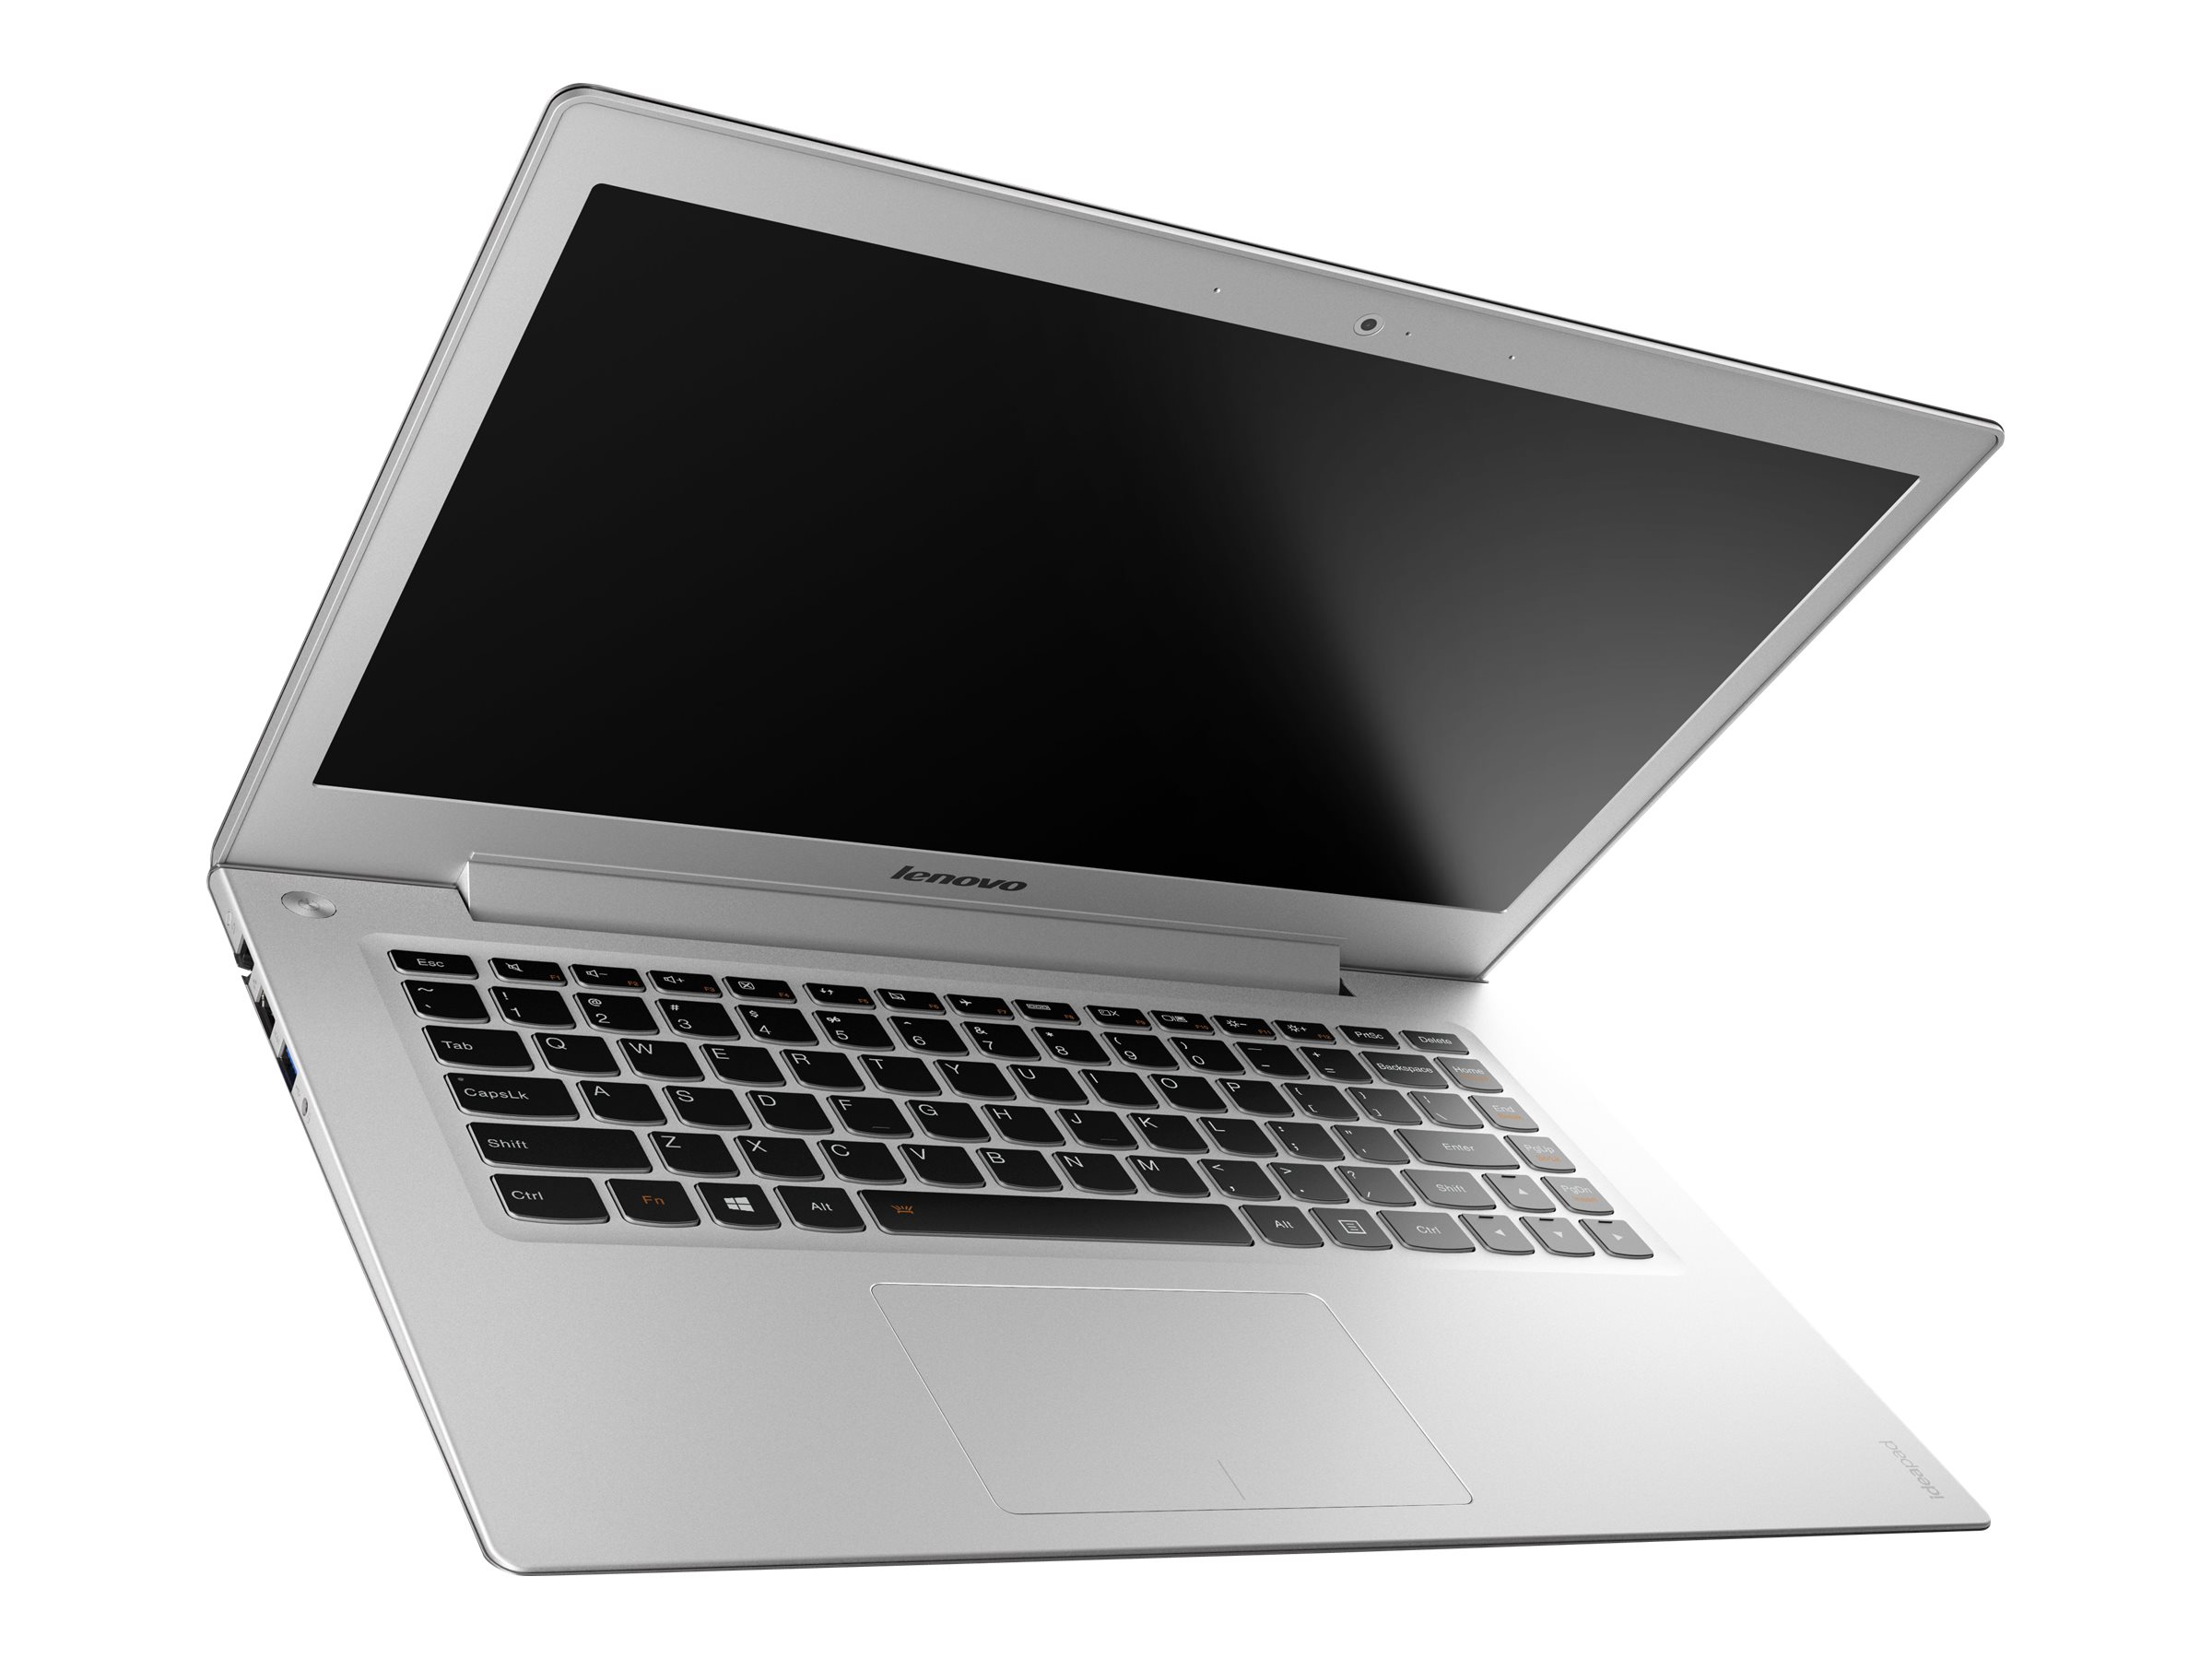 PC portable Hp Probook 6730B 15 Pouces Core 2 Duo 2,26 GHz - HDD 320